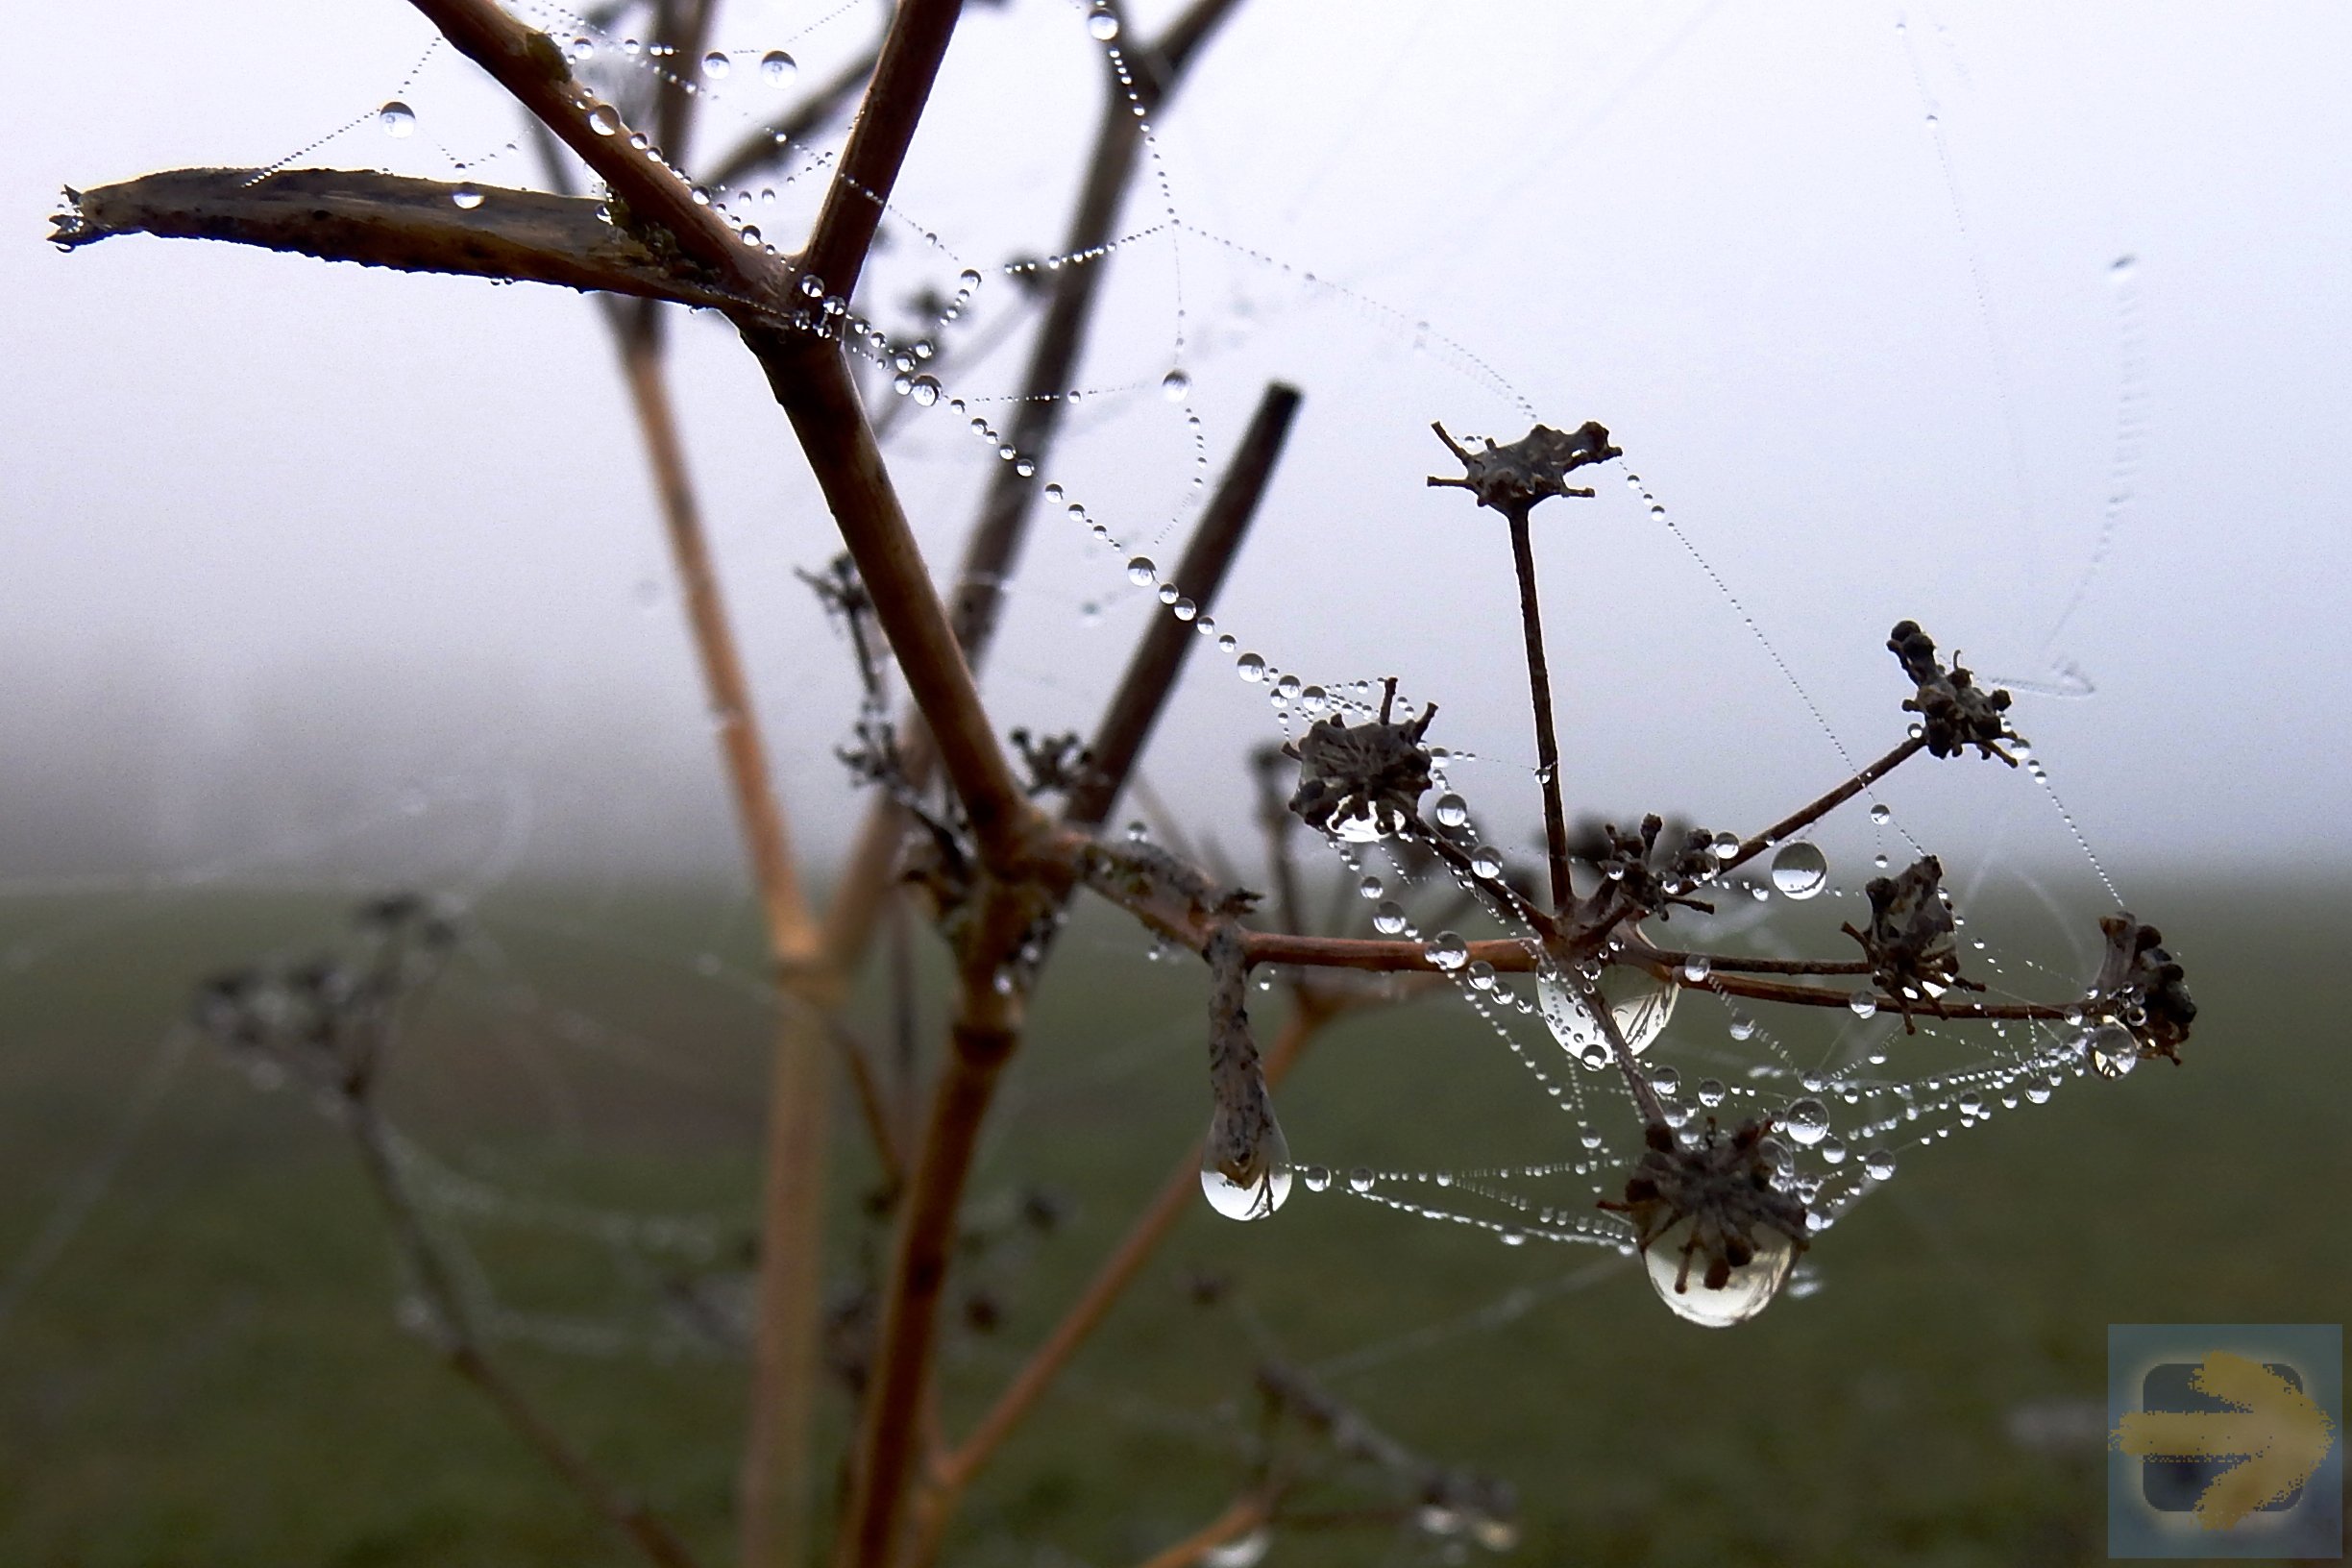 Spider webs and dew